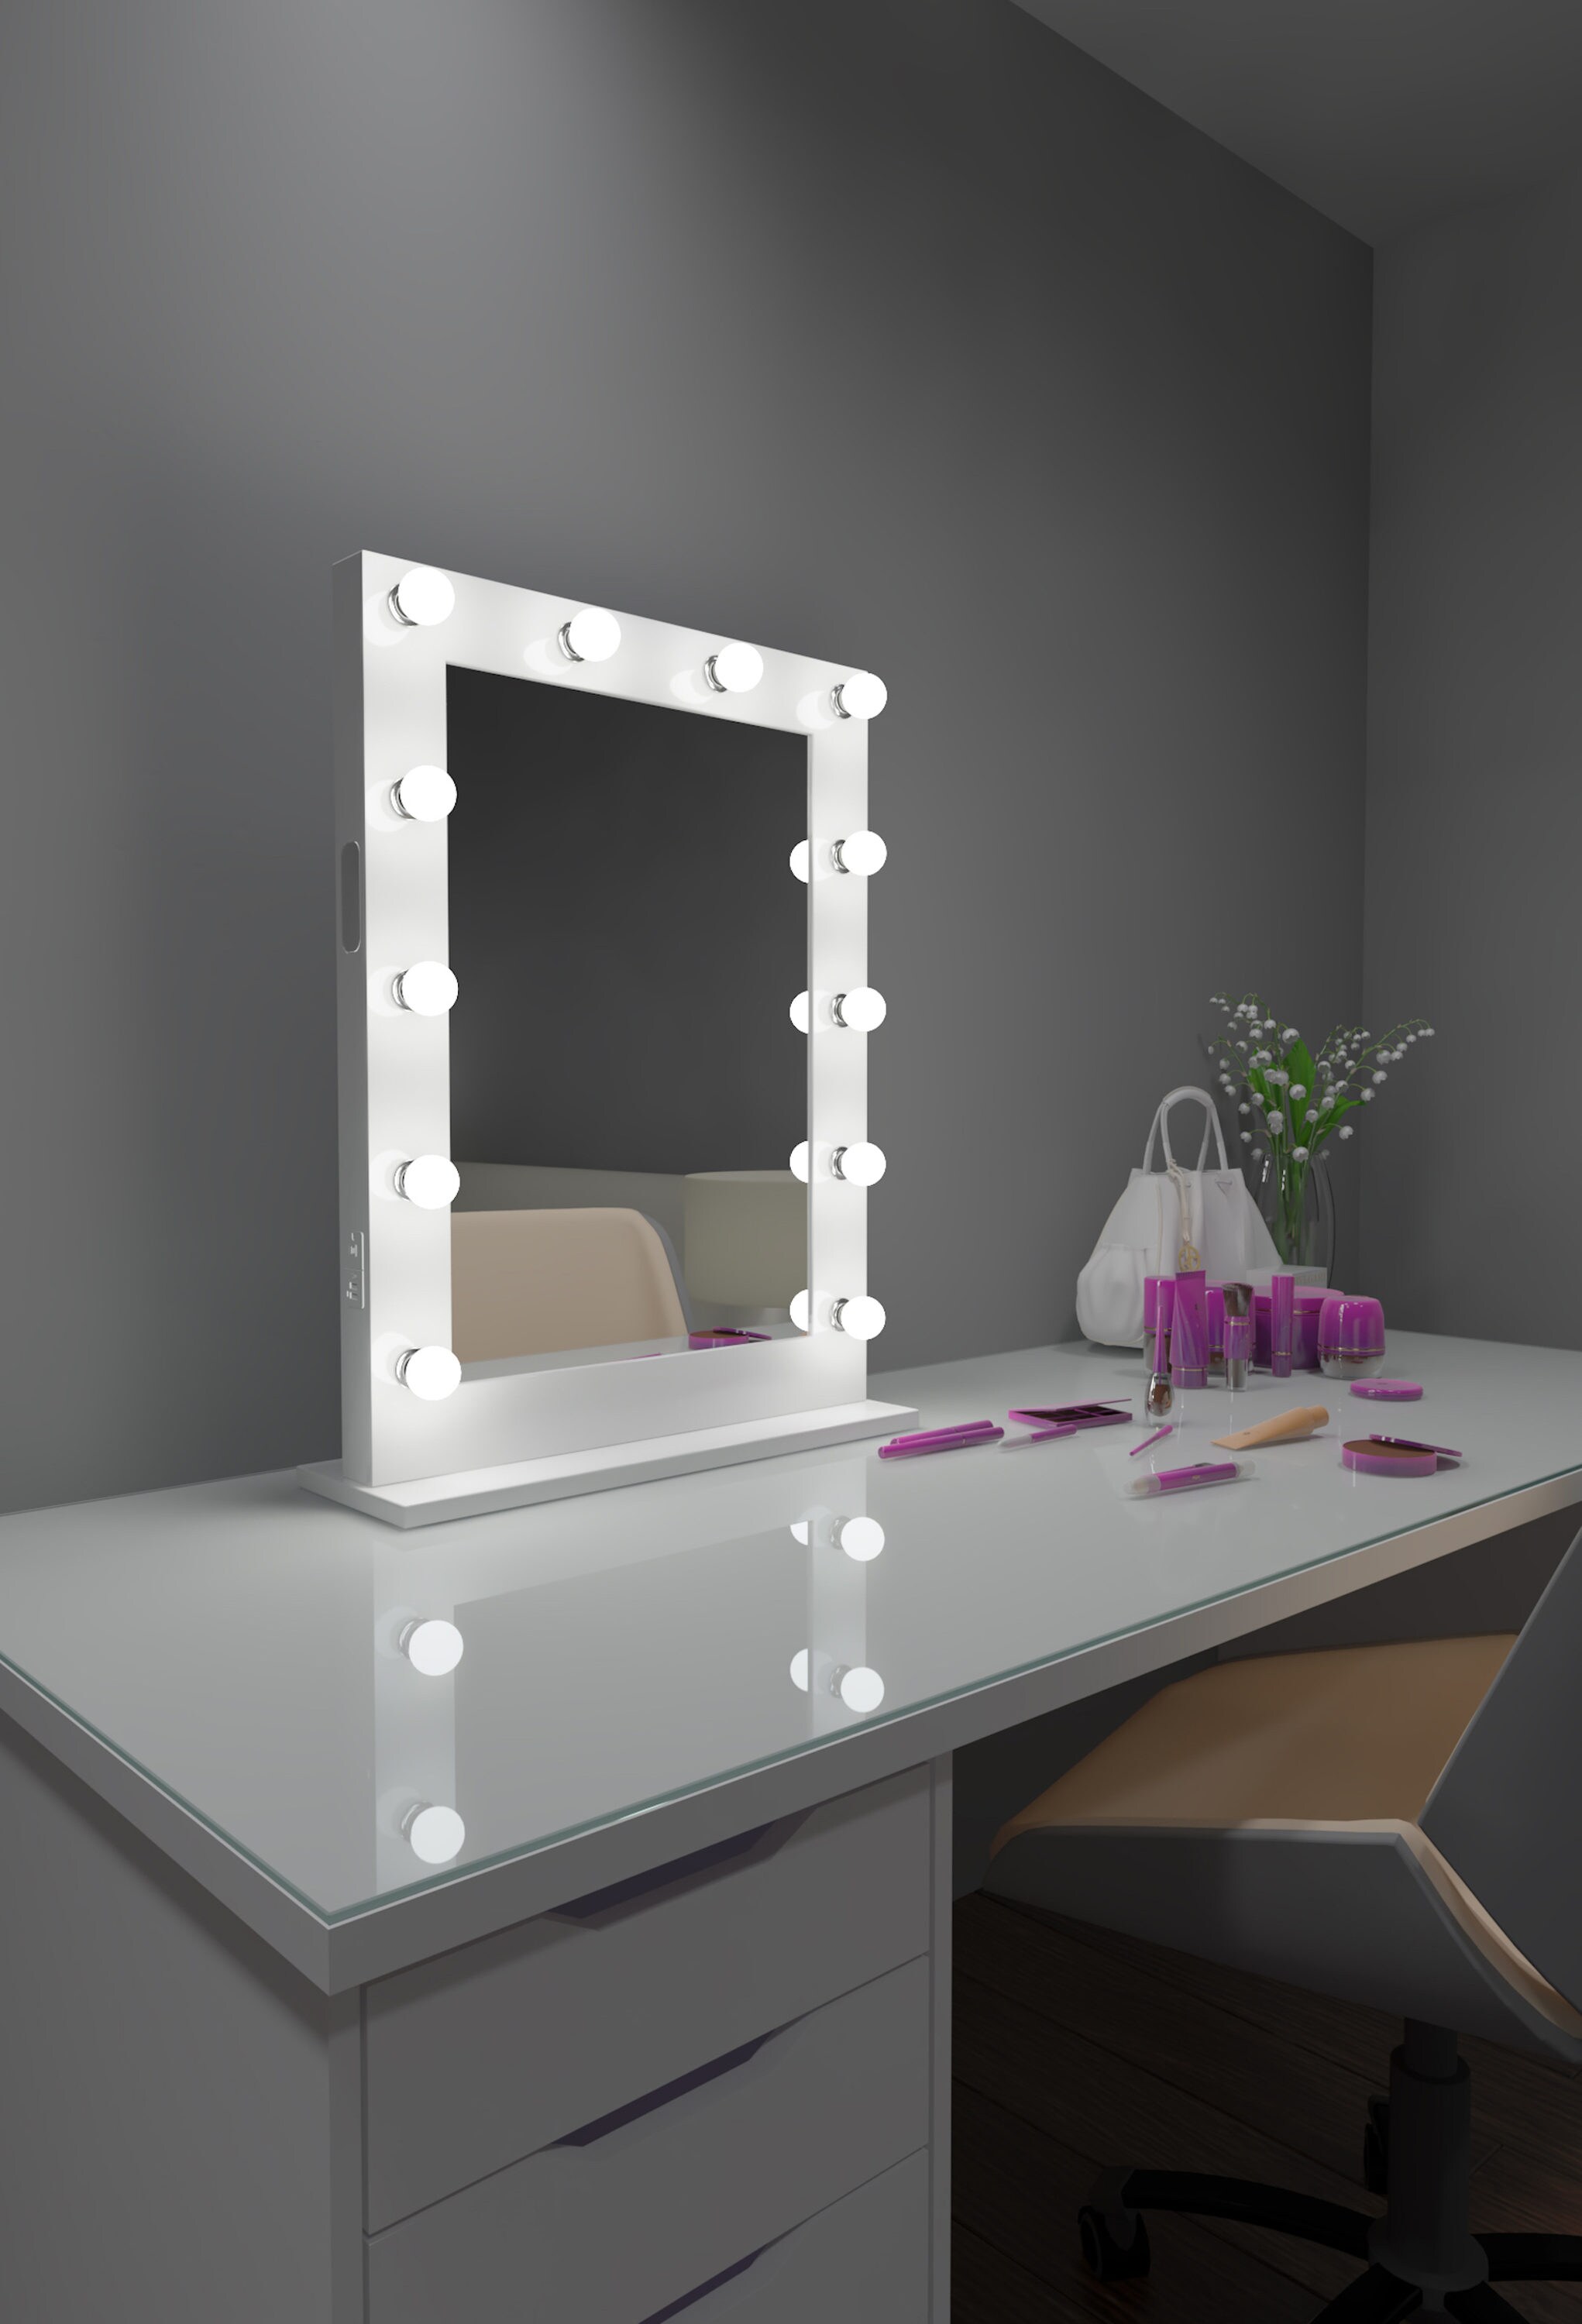 Design House Concord 24-in W x 31-in H White Rectangular Framed Bathroom Vanity Mirror